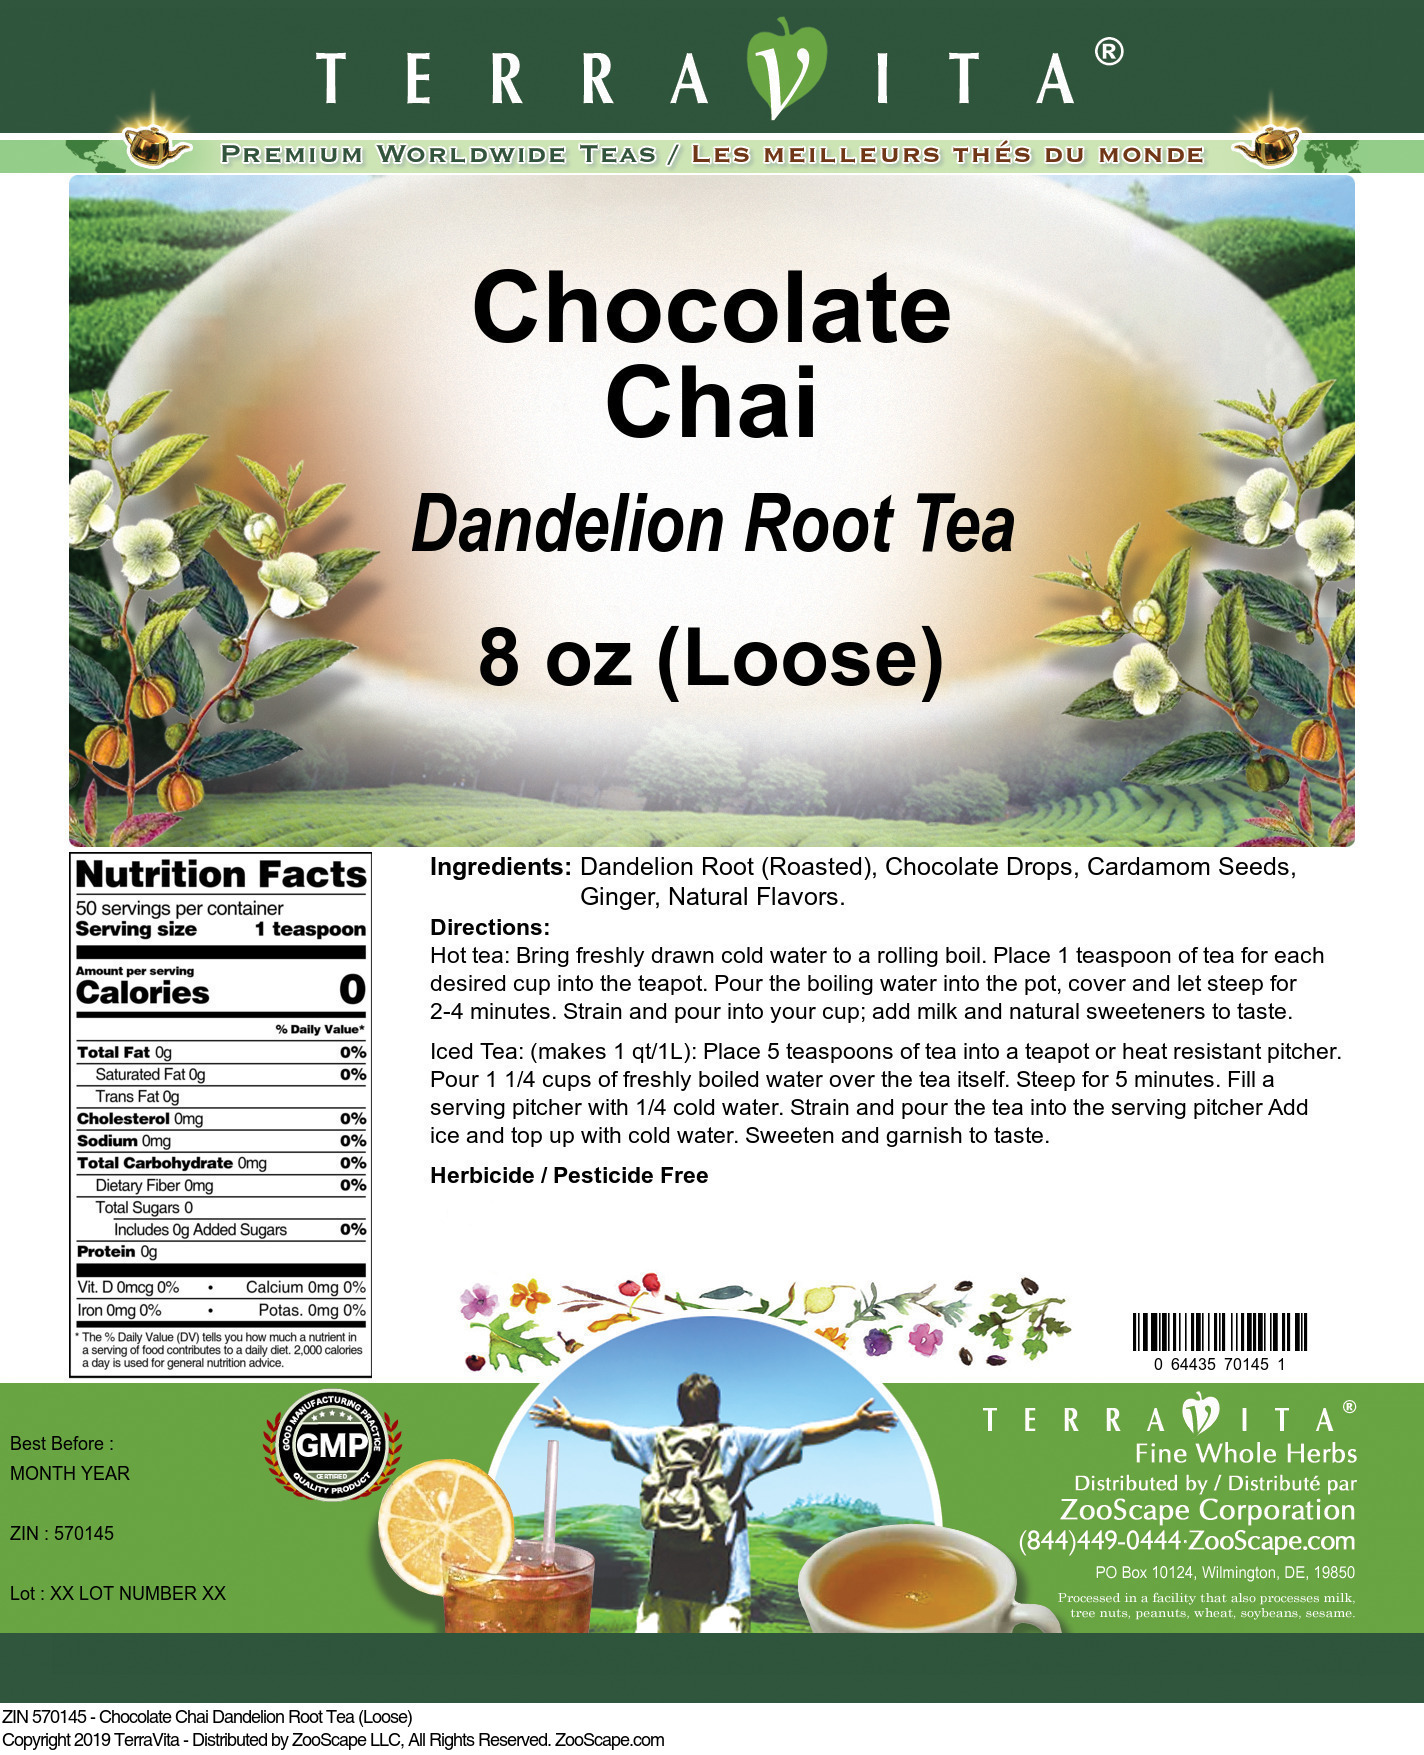 Chocolate Chai Dandelion Root Tea (Loose) - Label